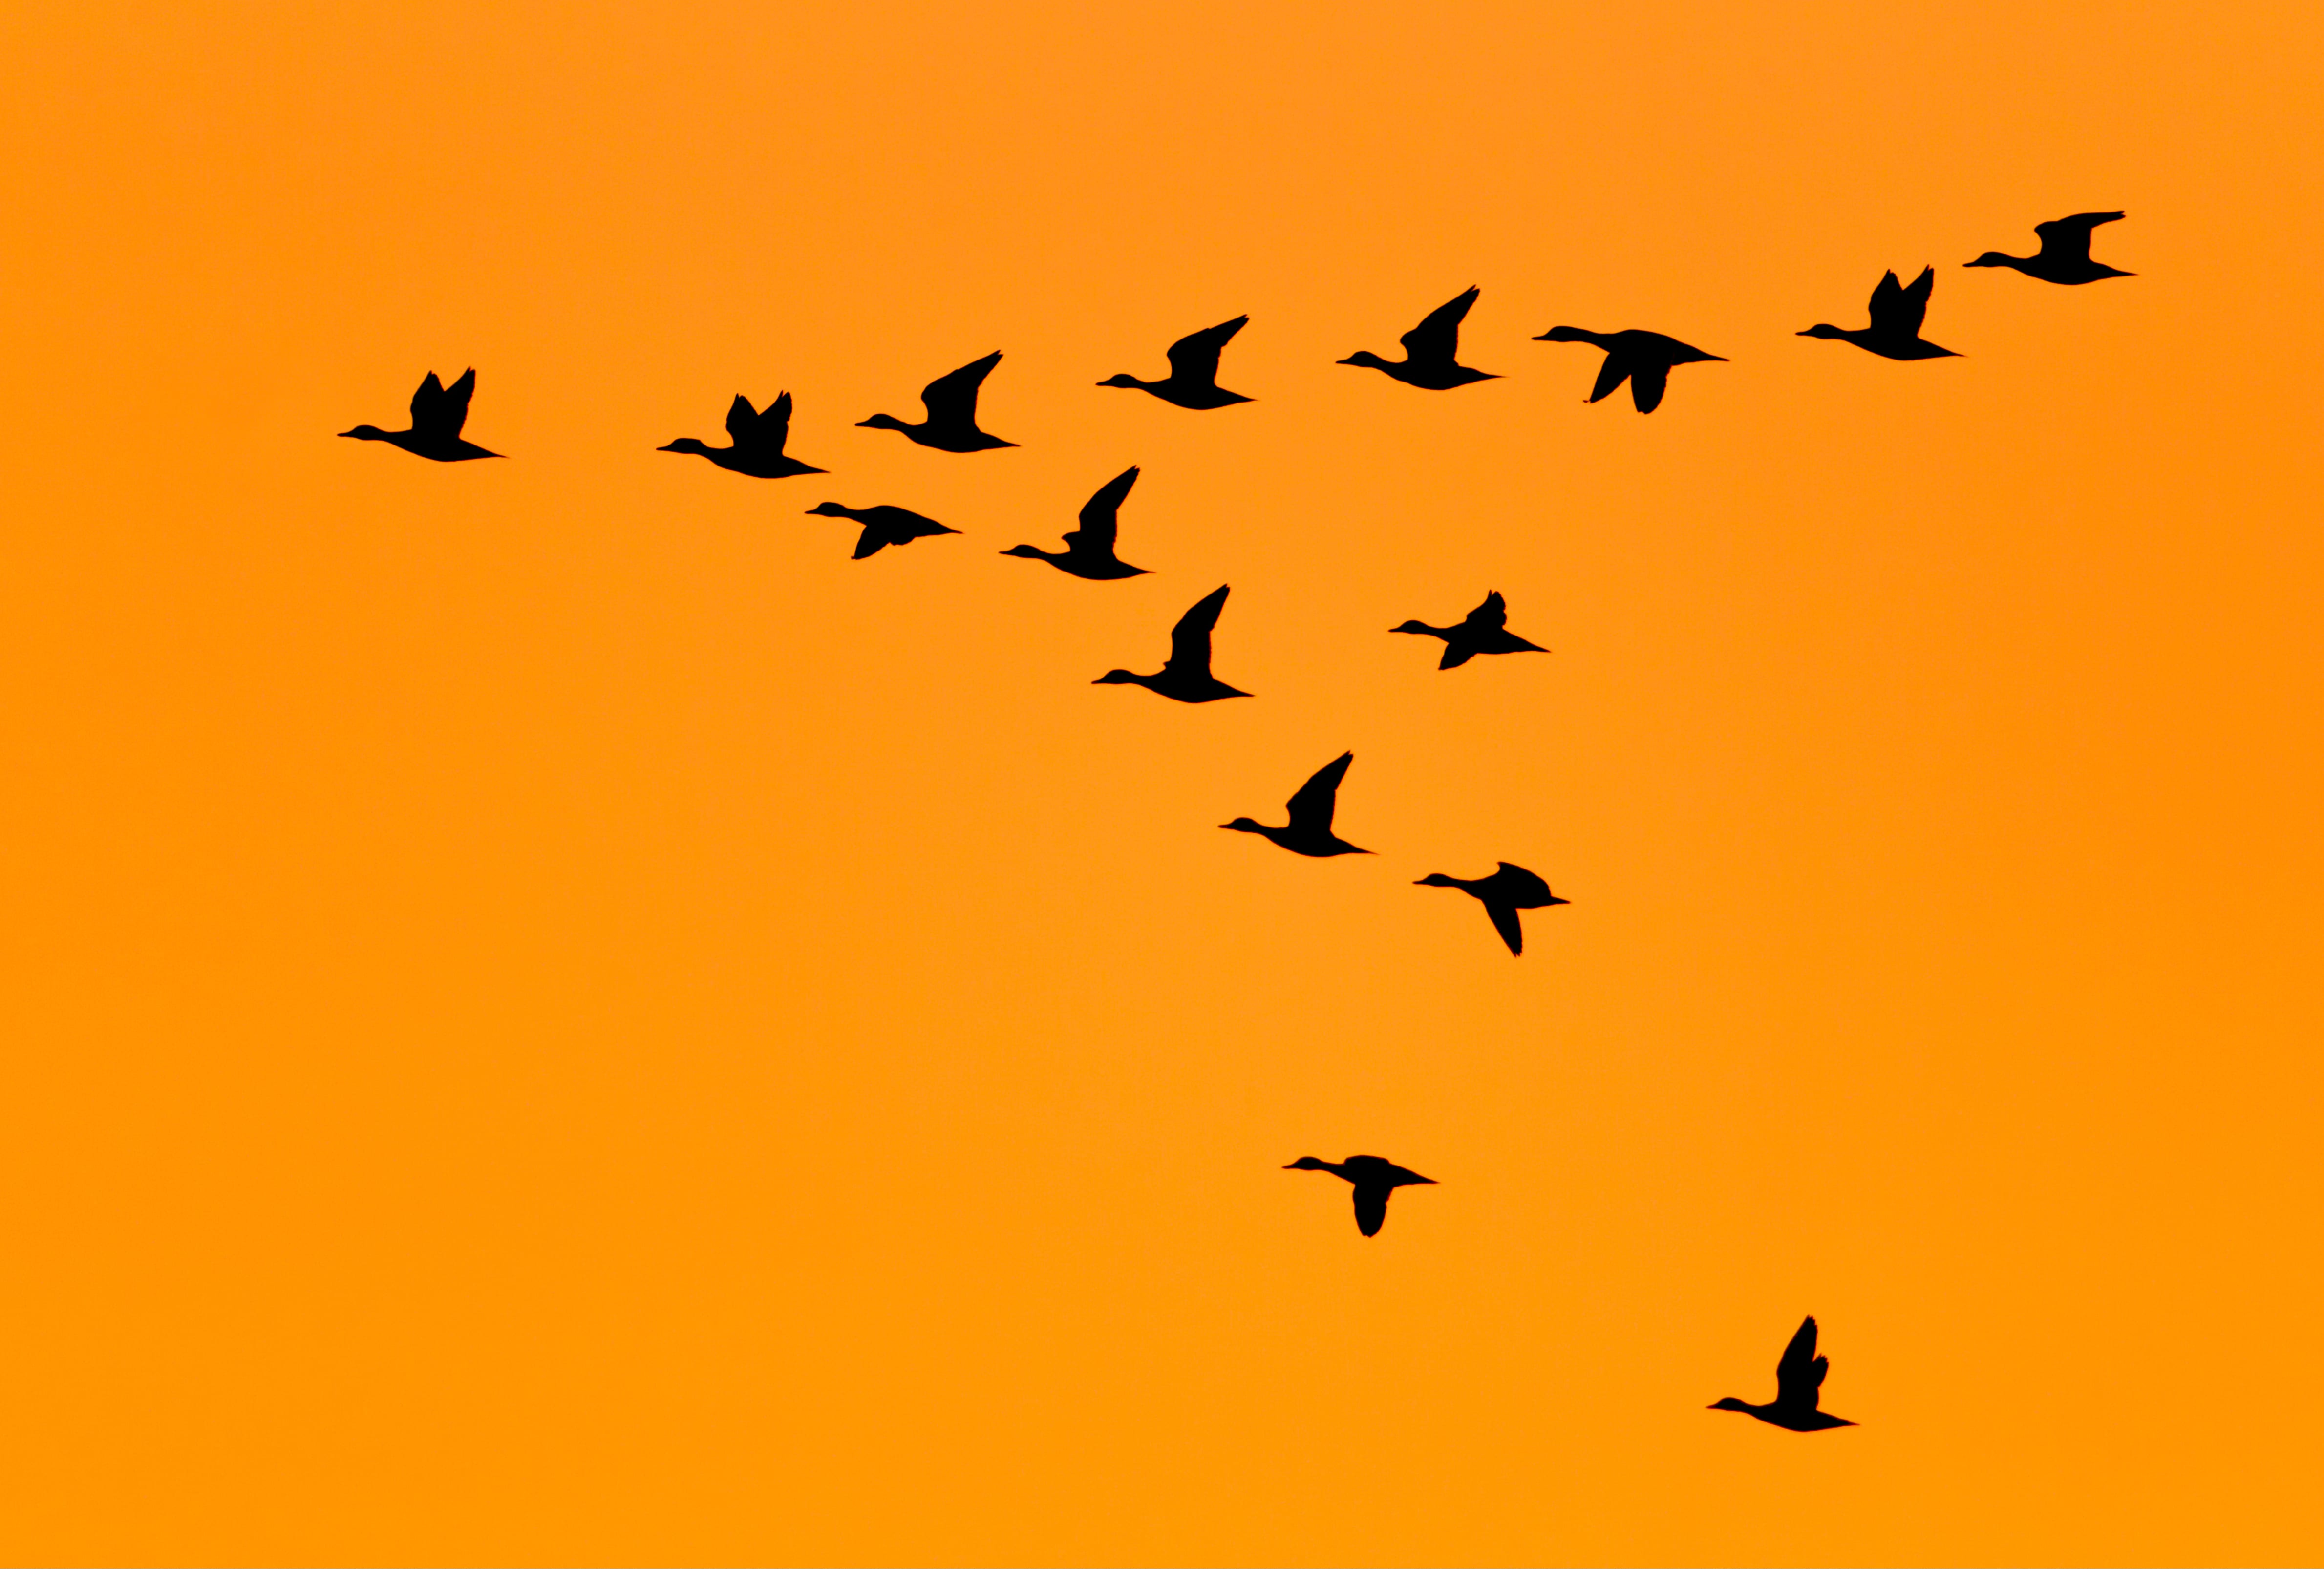 Ducks flying in V formation and sunrise sky